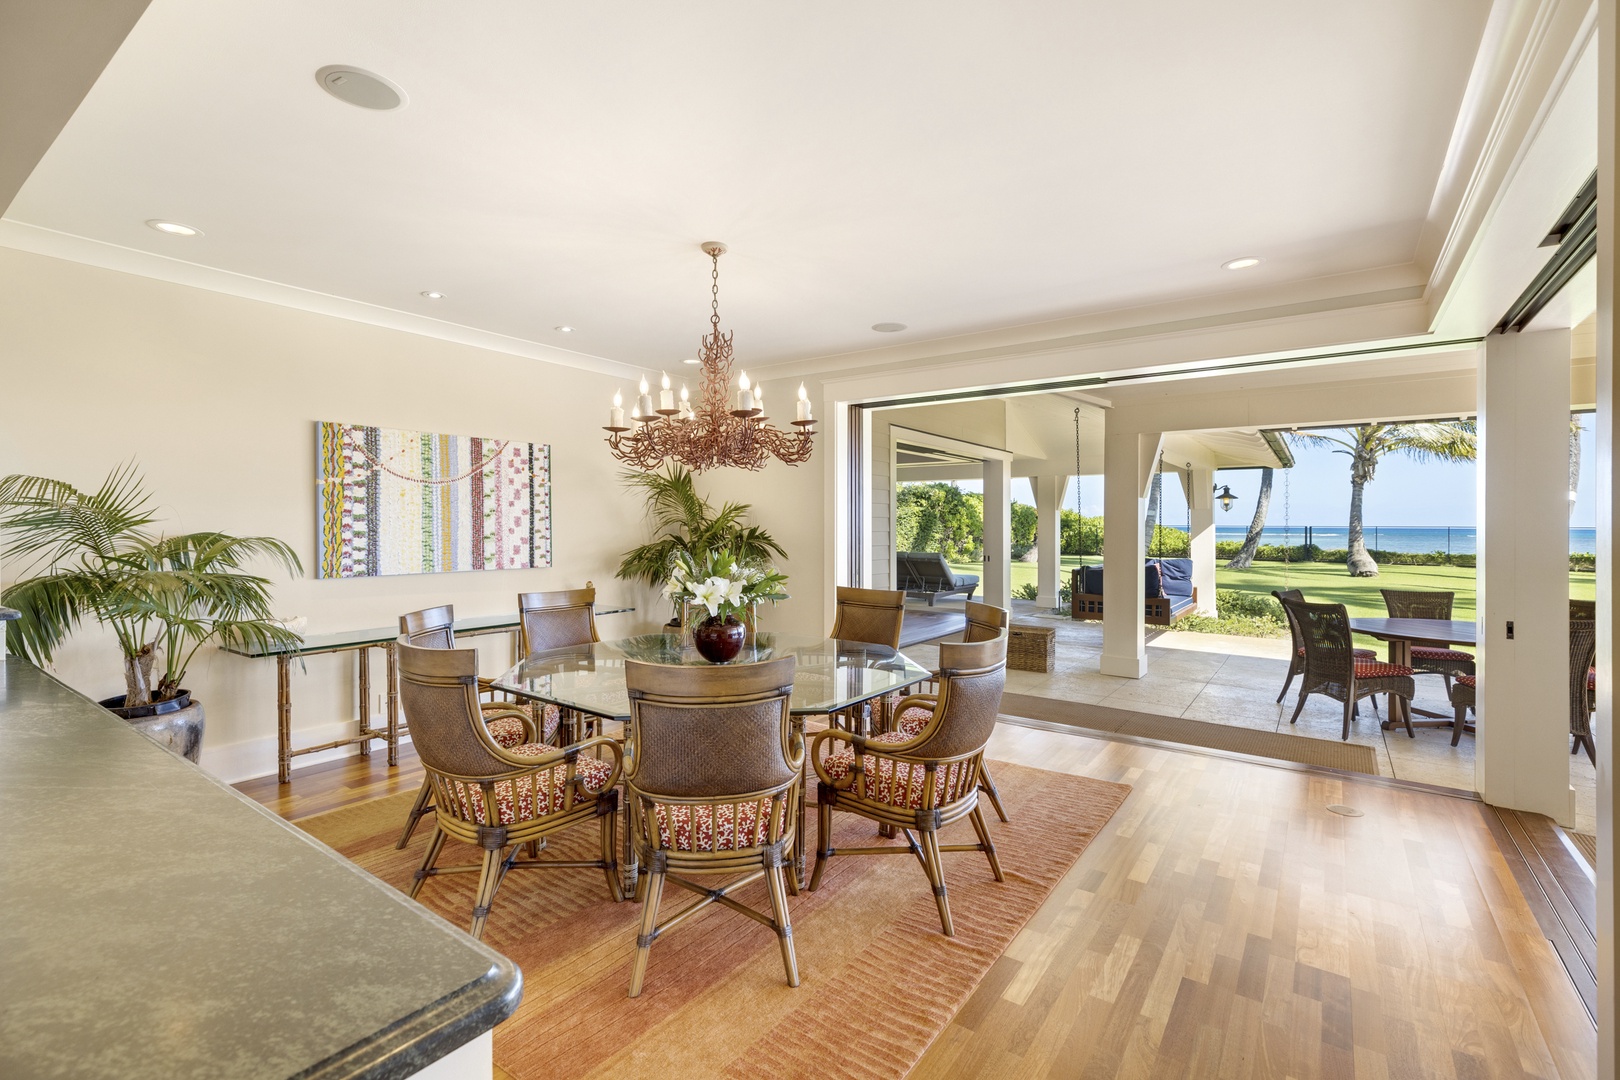 Honolulu Vacation Rentals, Kahala Beachside Estate - Dining area with ocean views